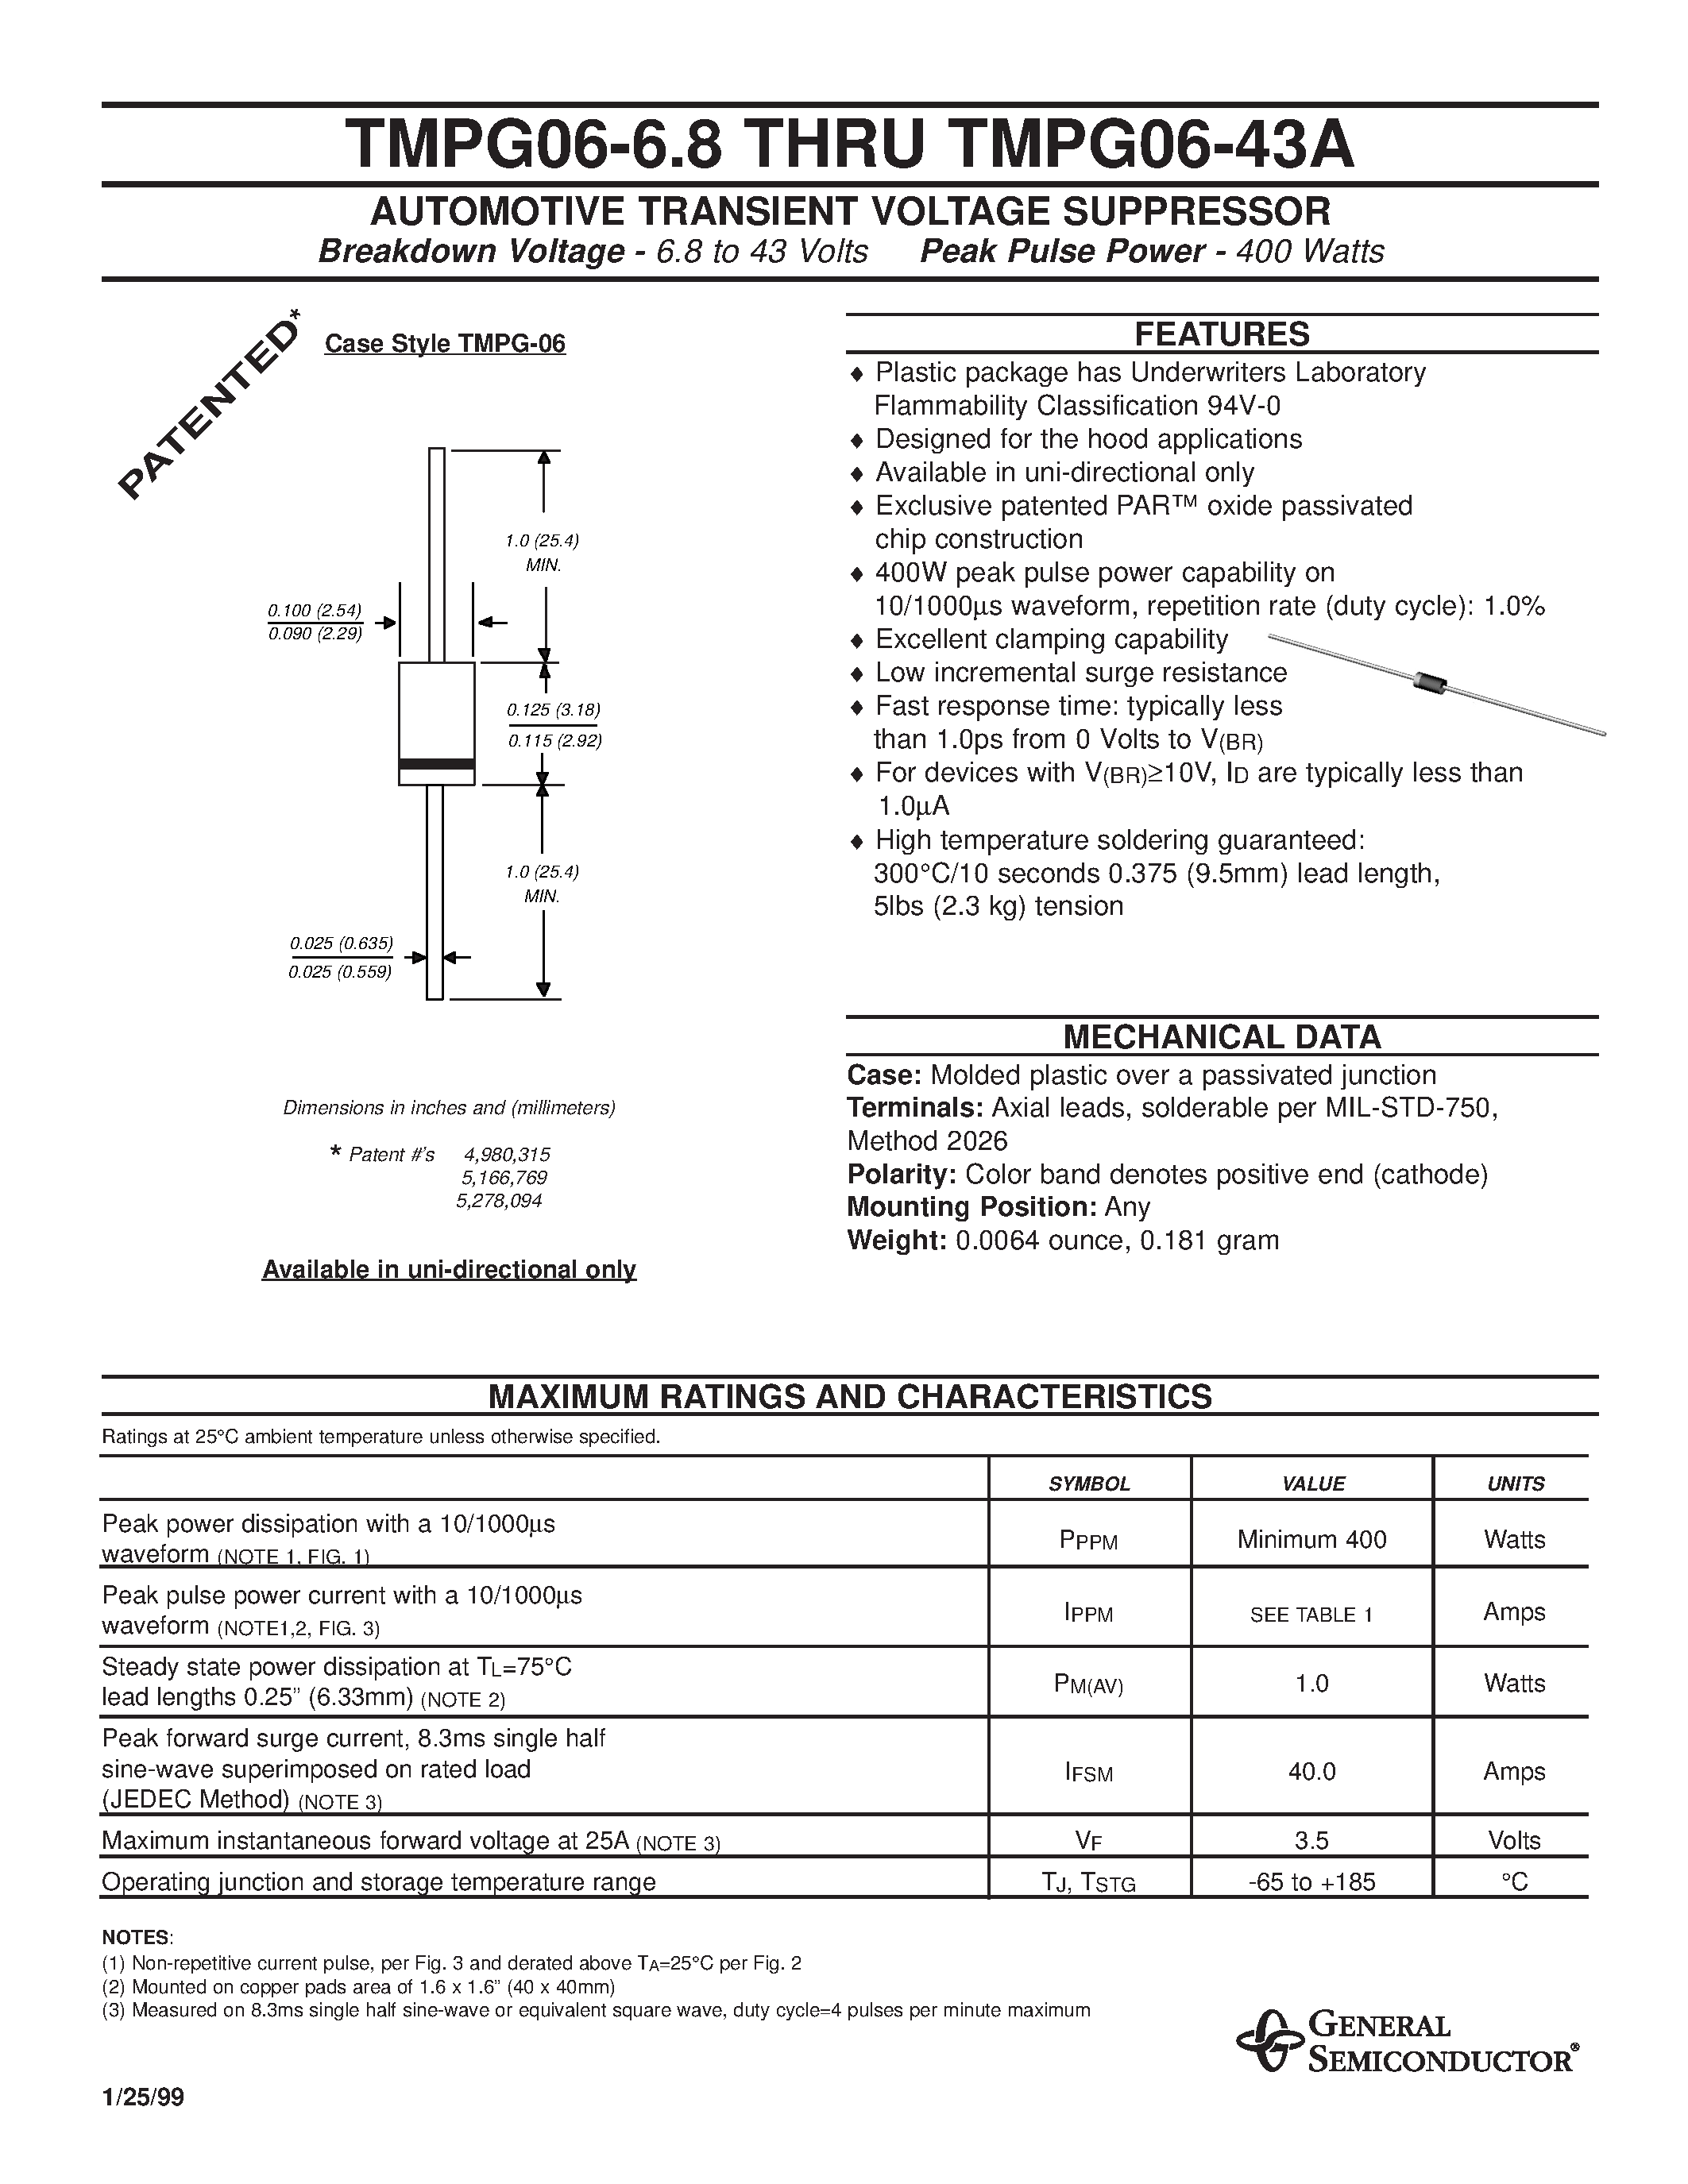 Datasheet TMPG06-9.1A - AUTOMOTIVE TRANSIENT VOLTAGE SUPPRESSOR page 1